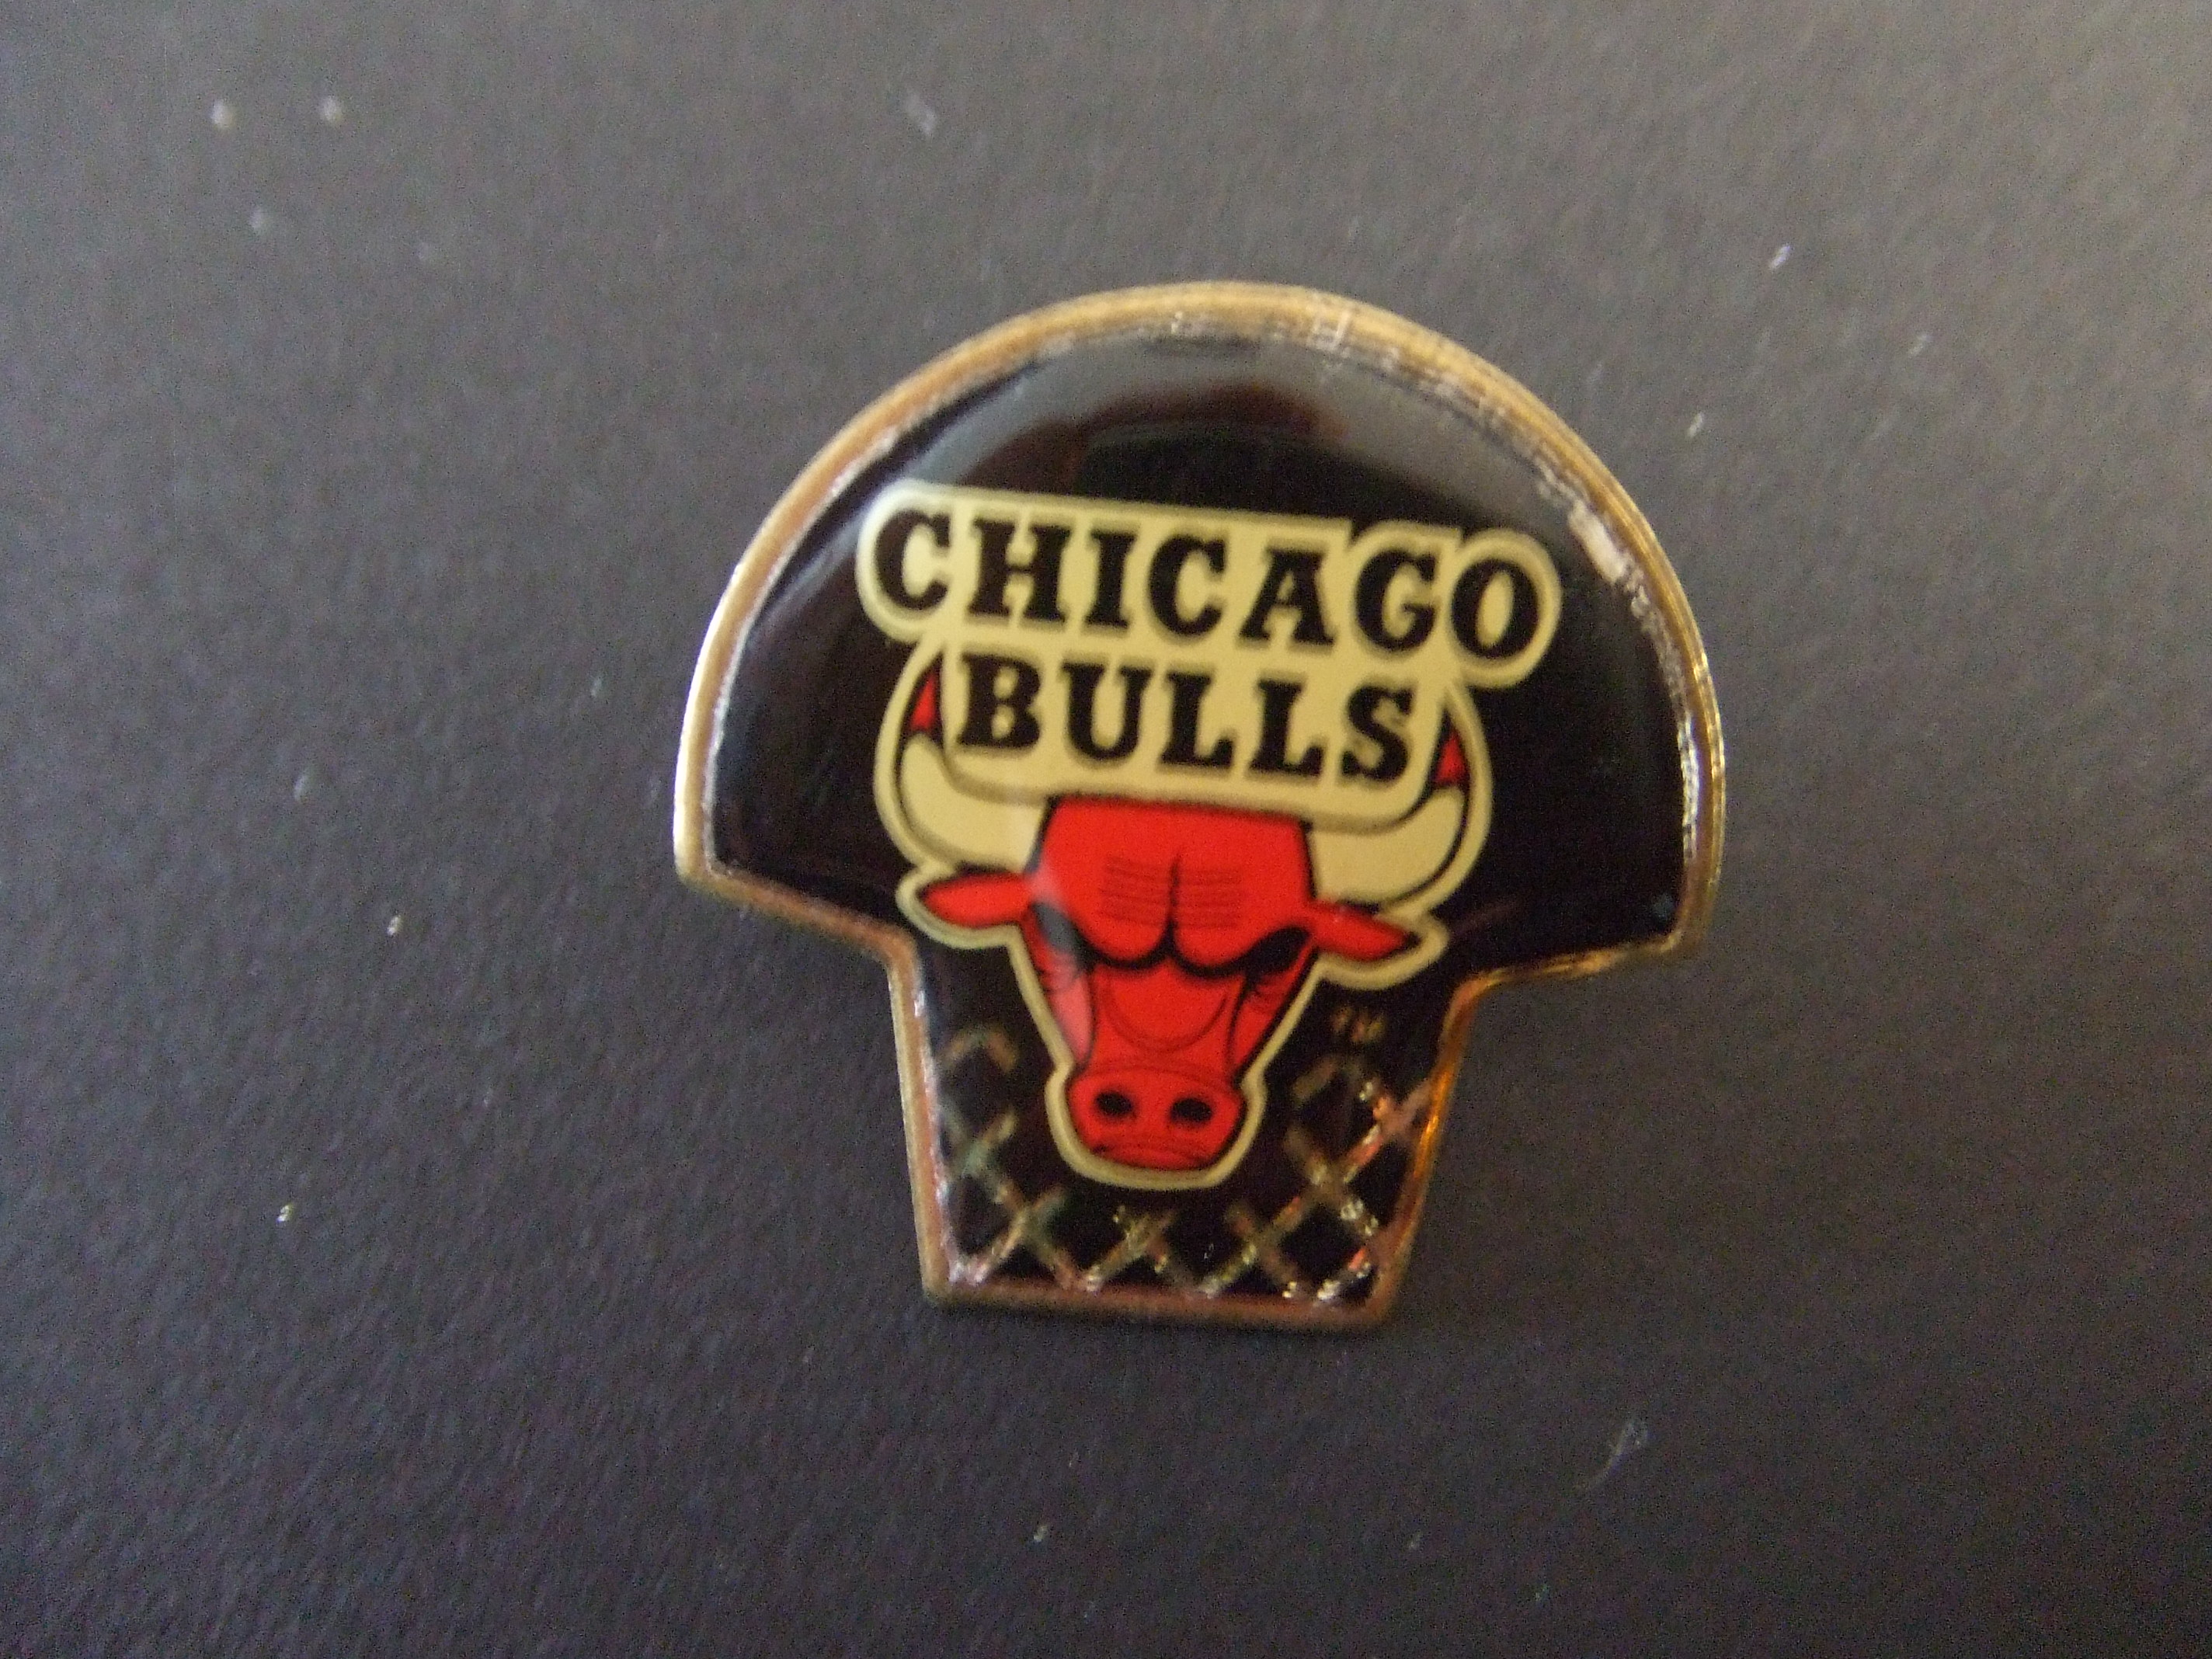 Chicago Bulls basketbal Central Division Eastern Conference